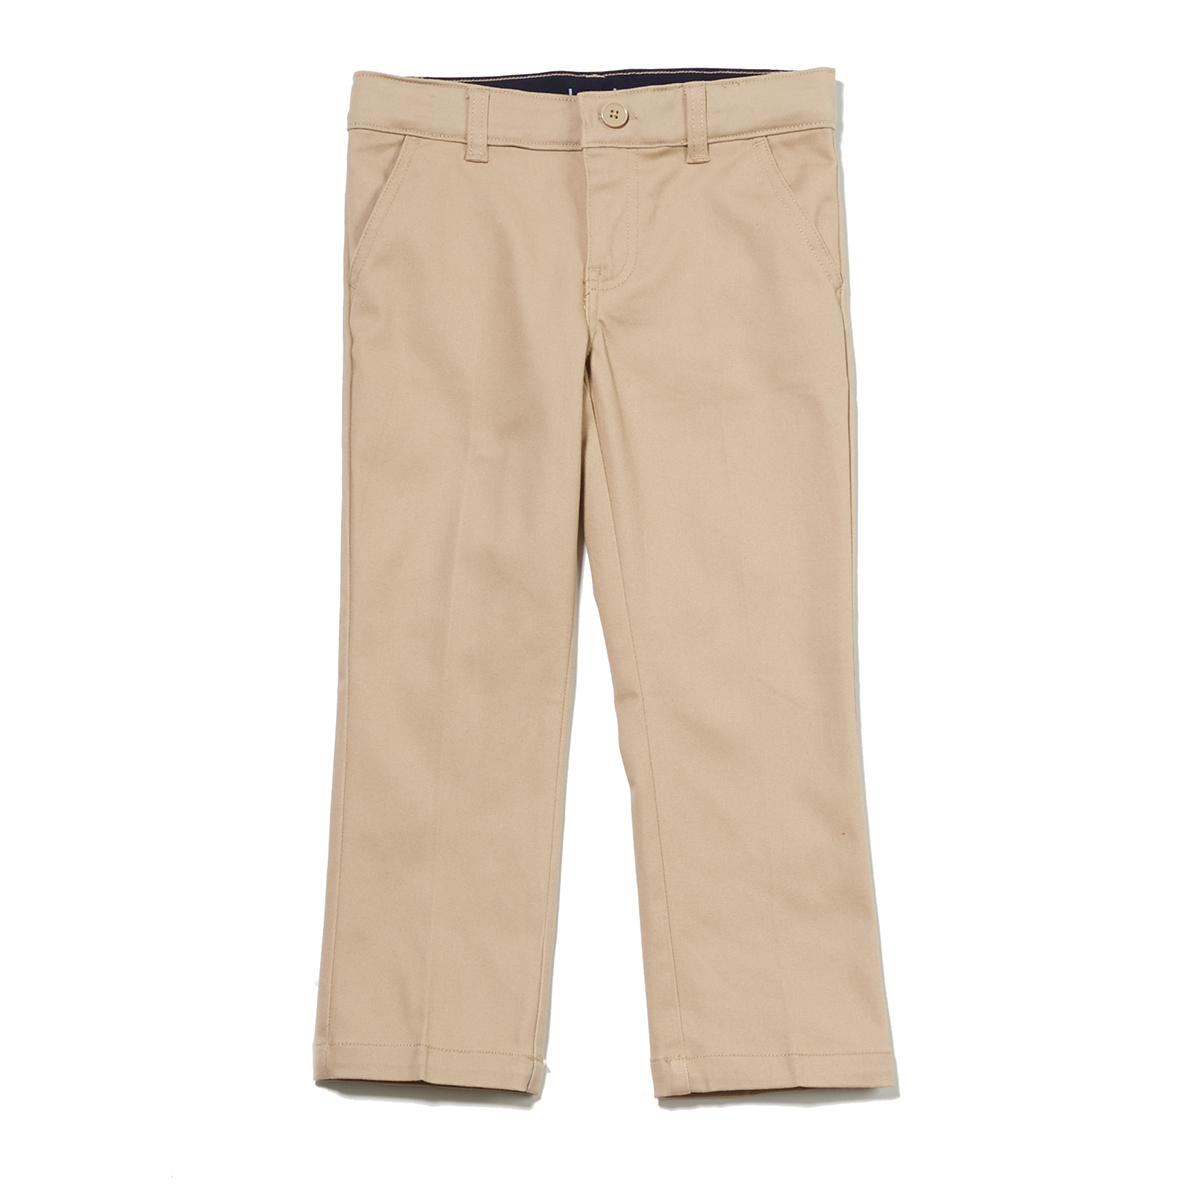 Boys (4-7) Straight Fit Comfort Waist Pants